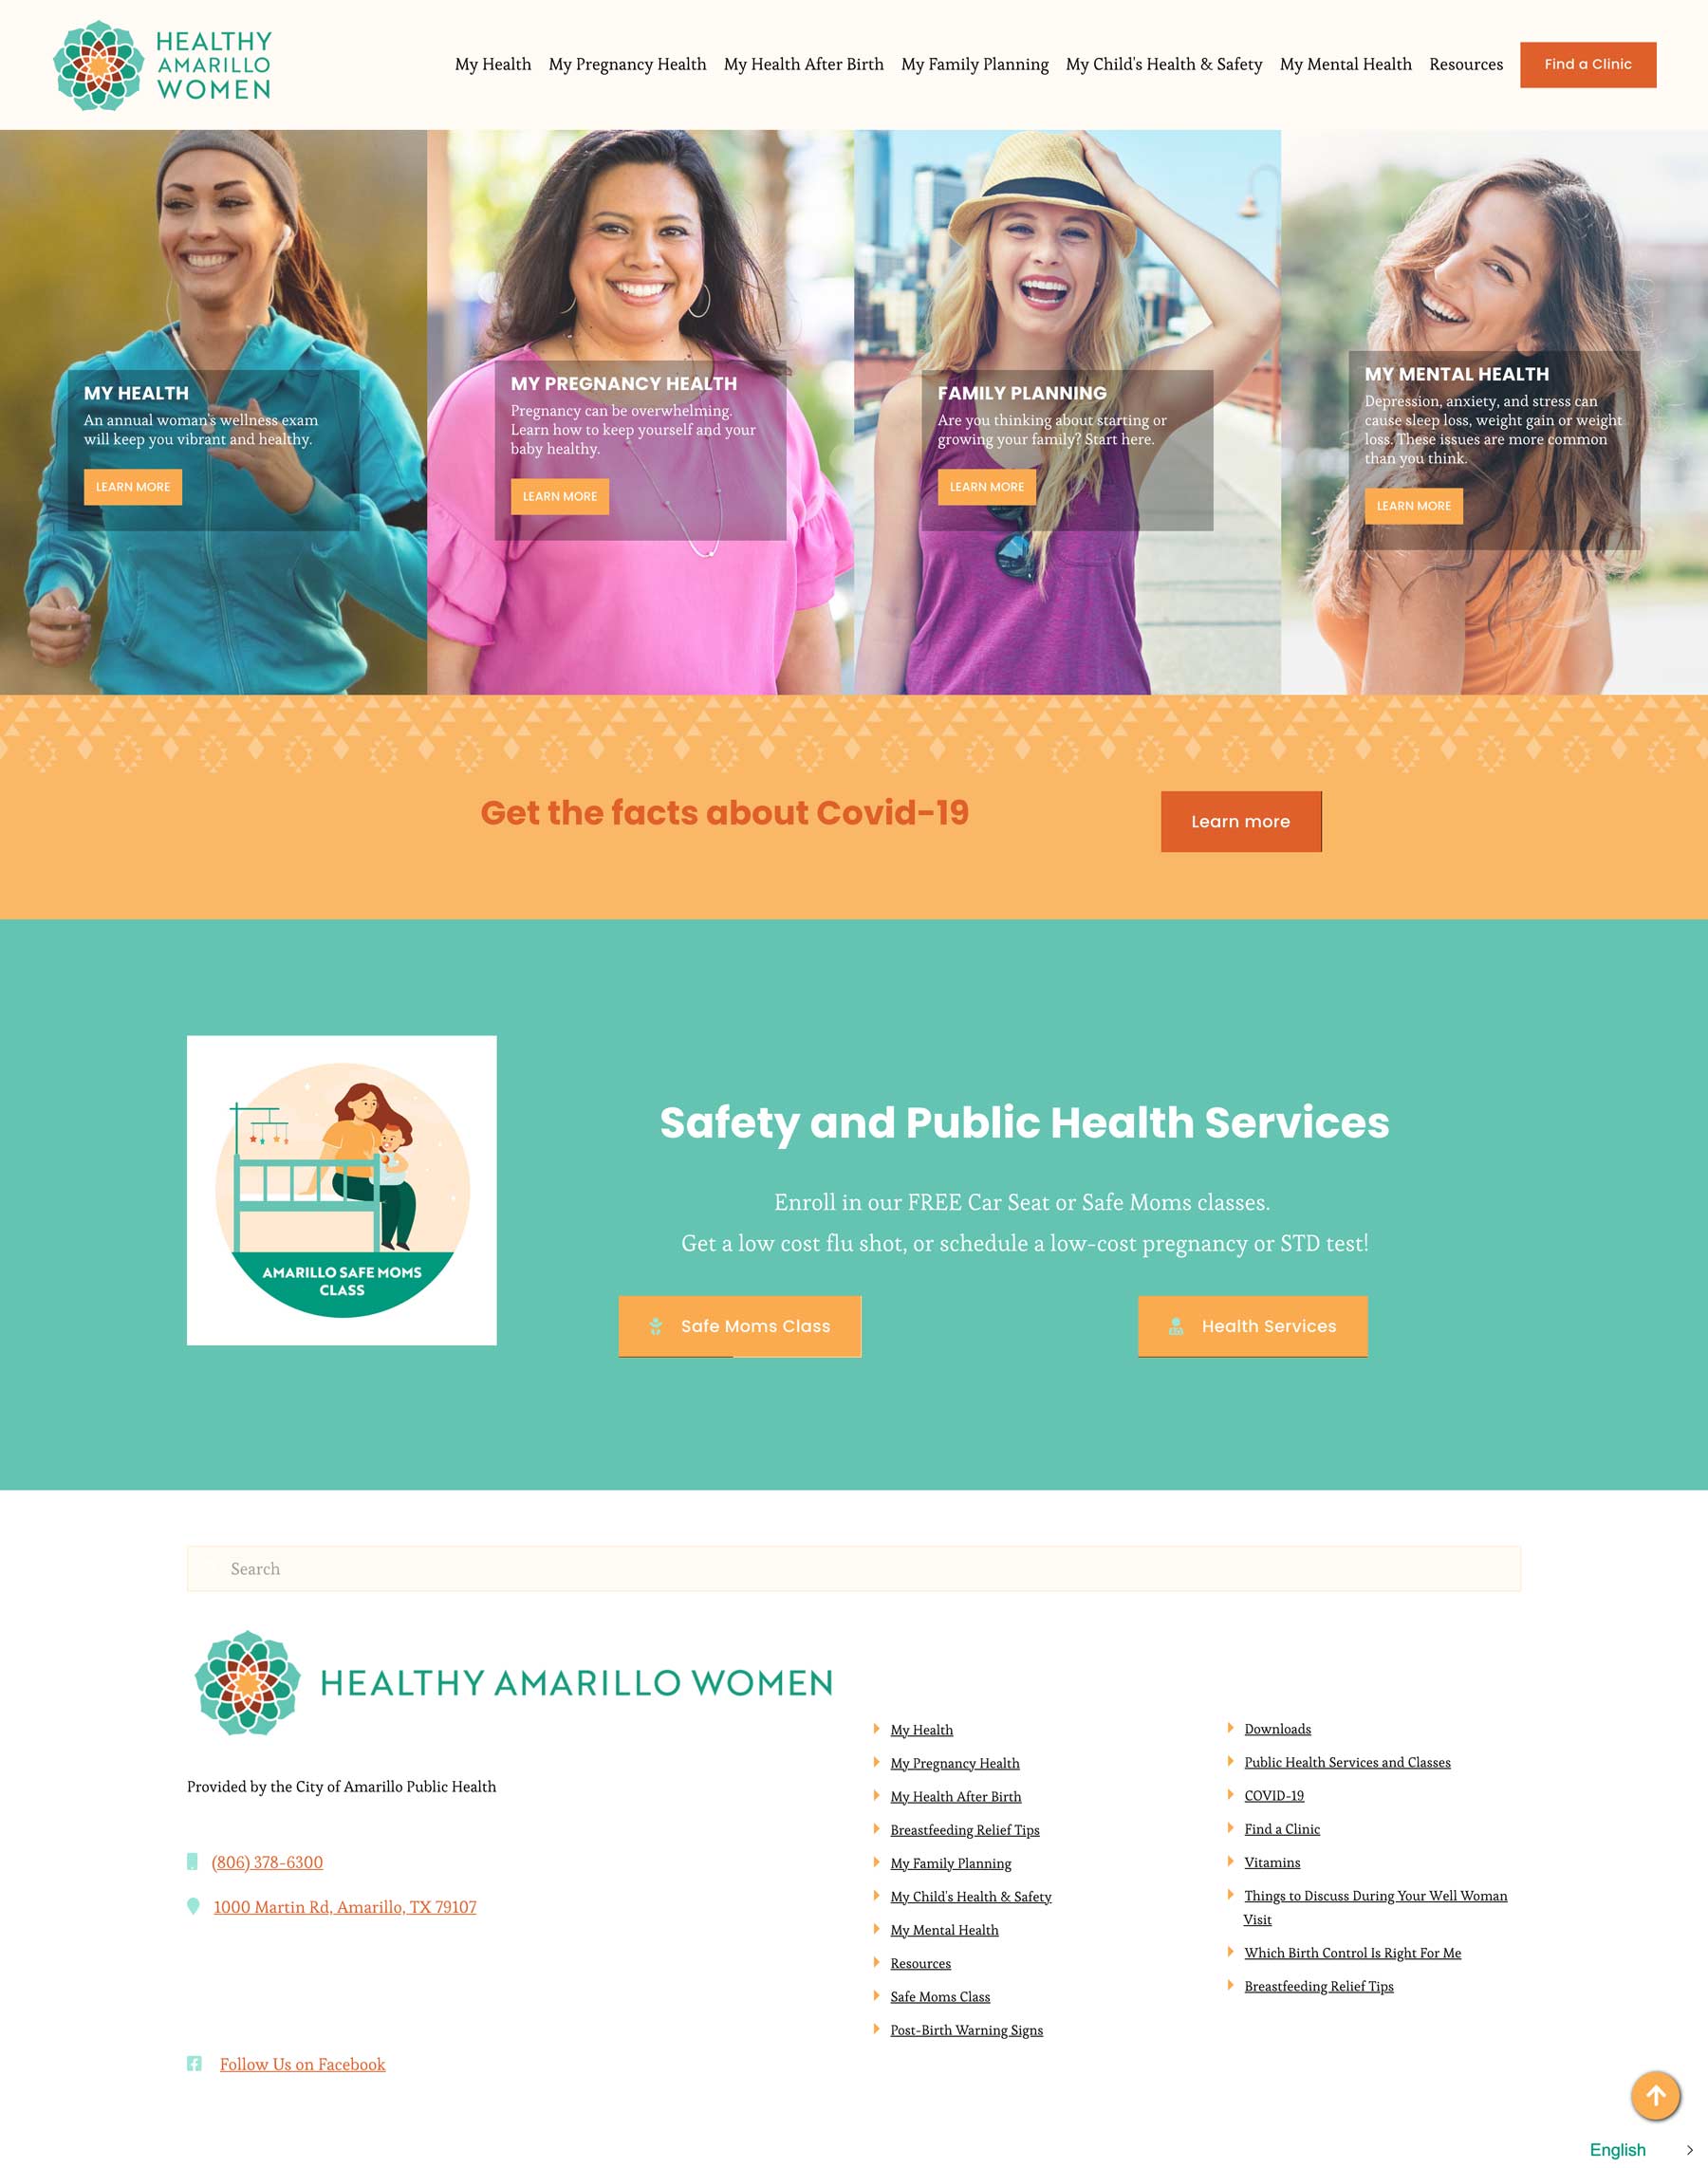 health amarillo women homepage